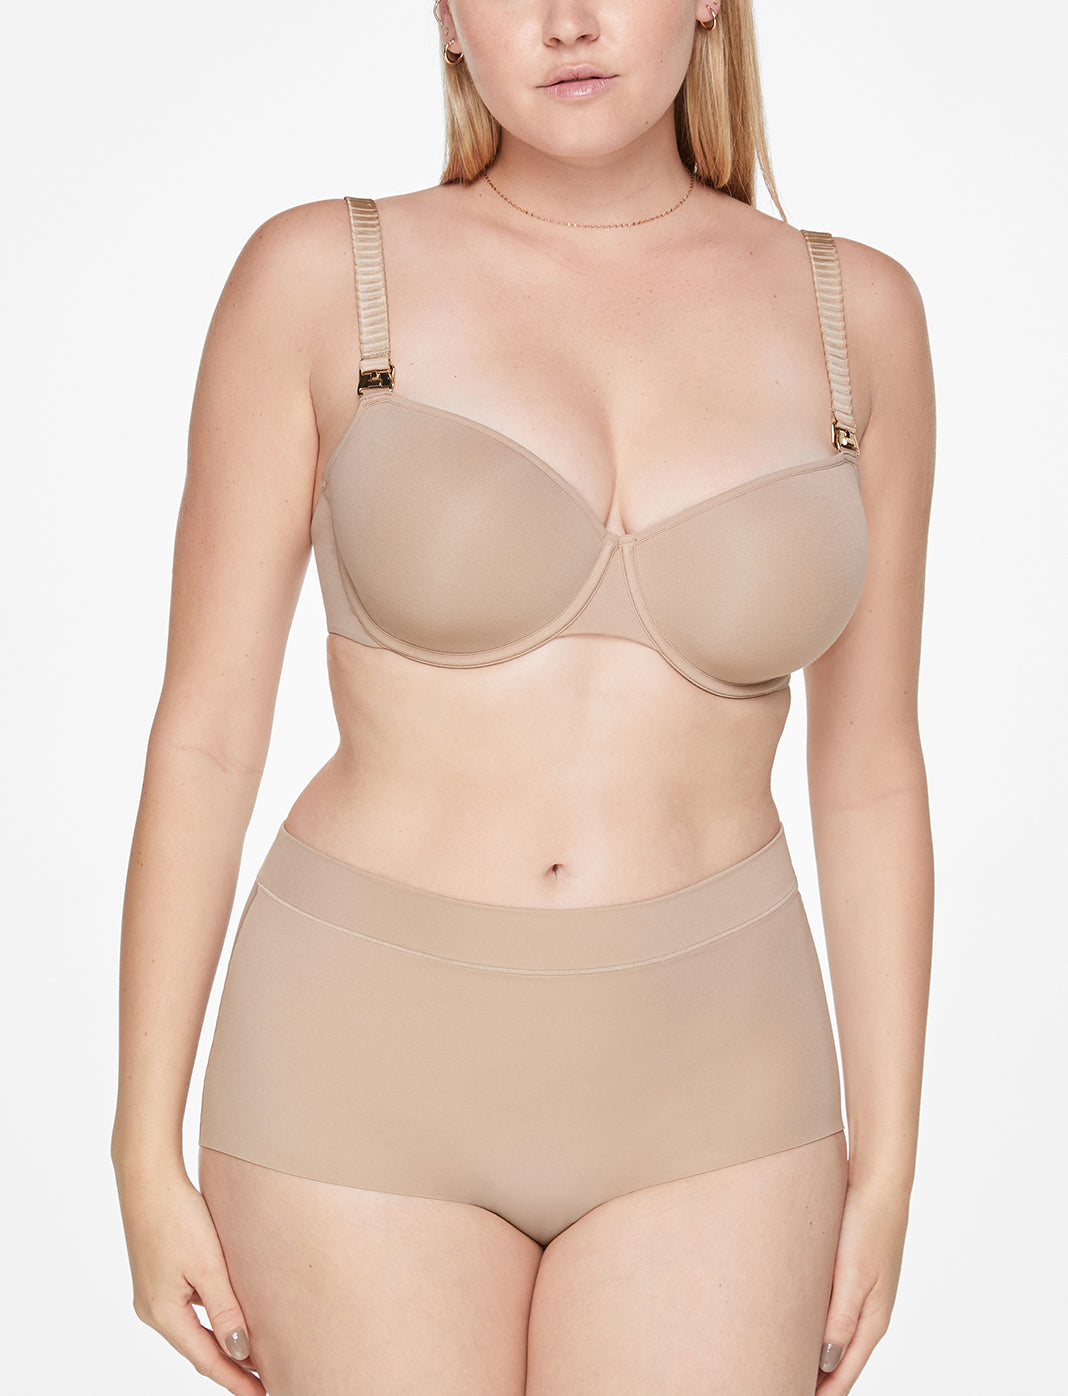 Wholesale 44f bra For Supportive Underwear 